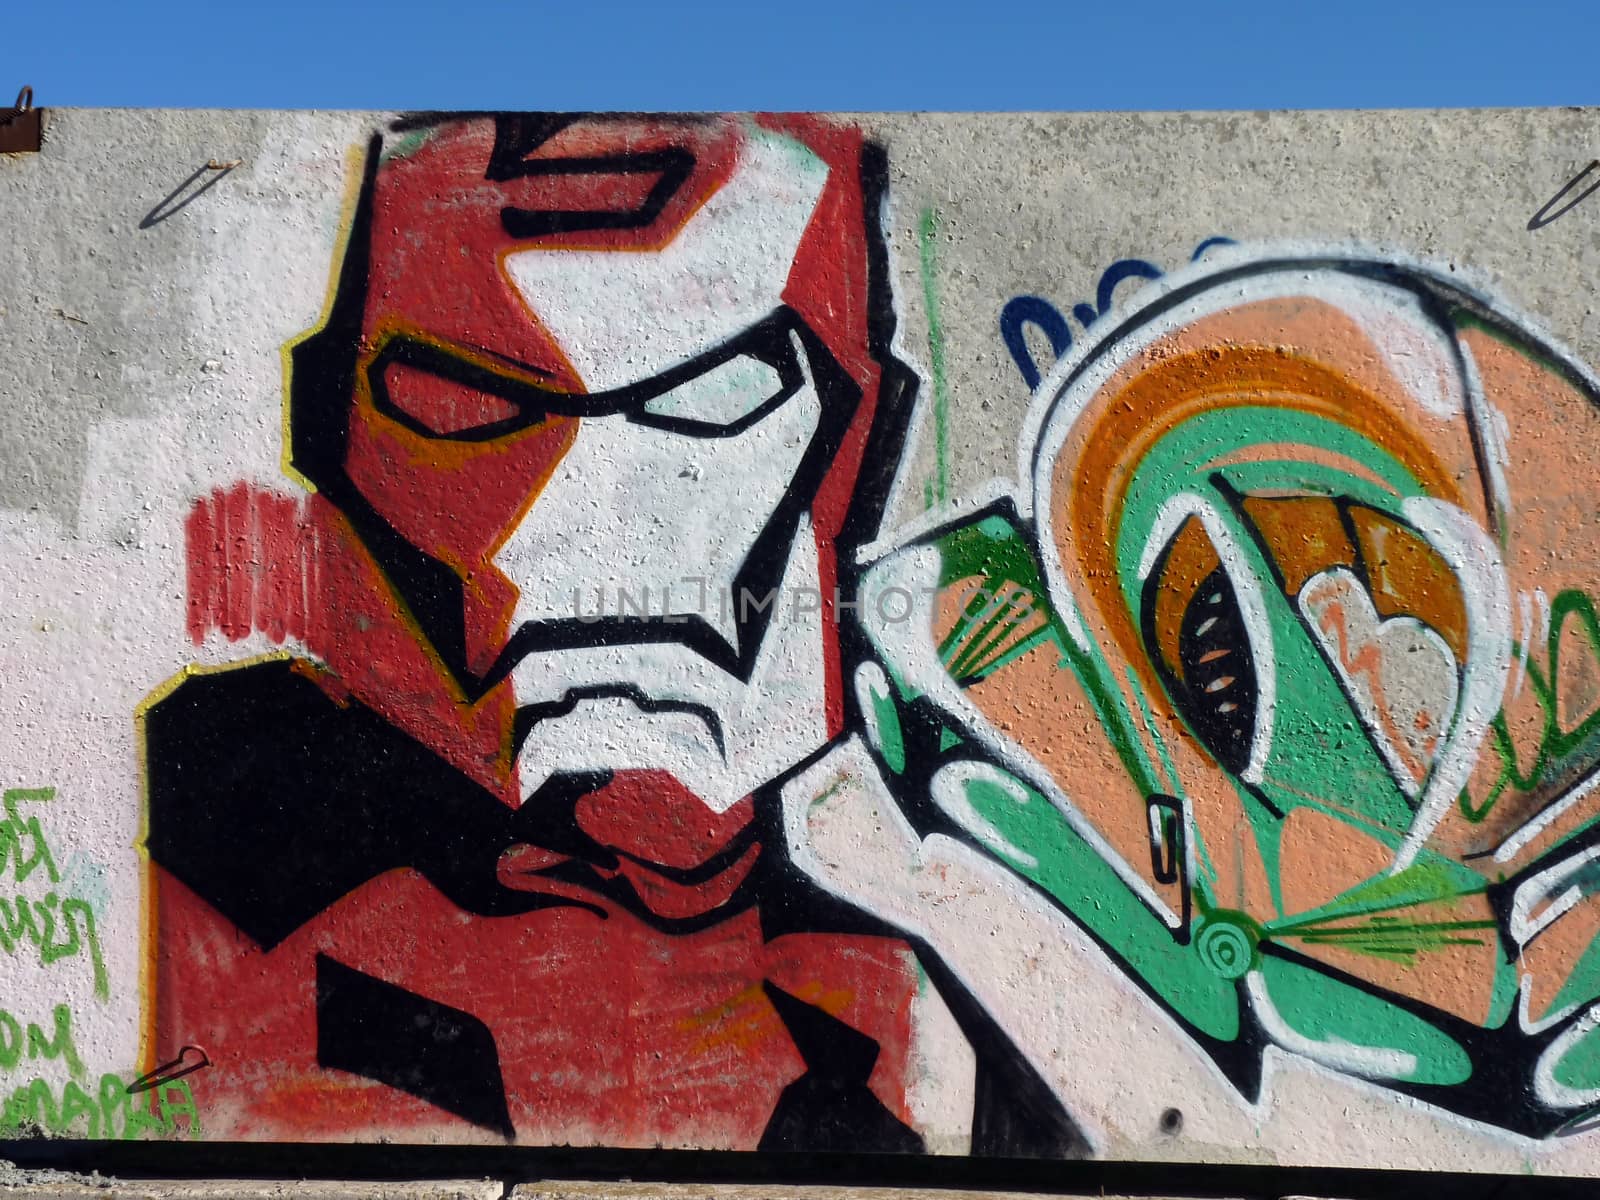 Graffiti Iron Man on a concrete wall in the city of Volgograd